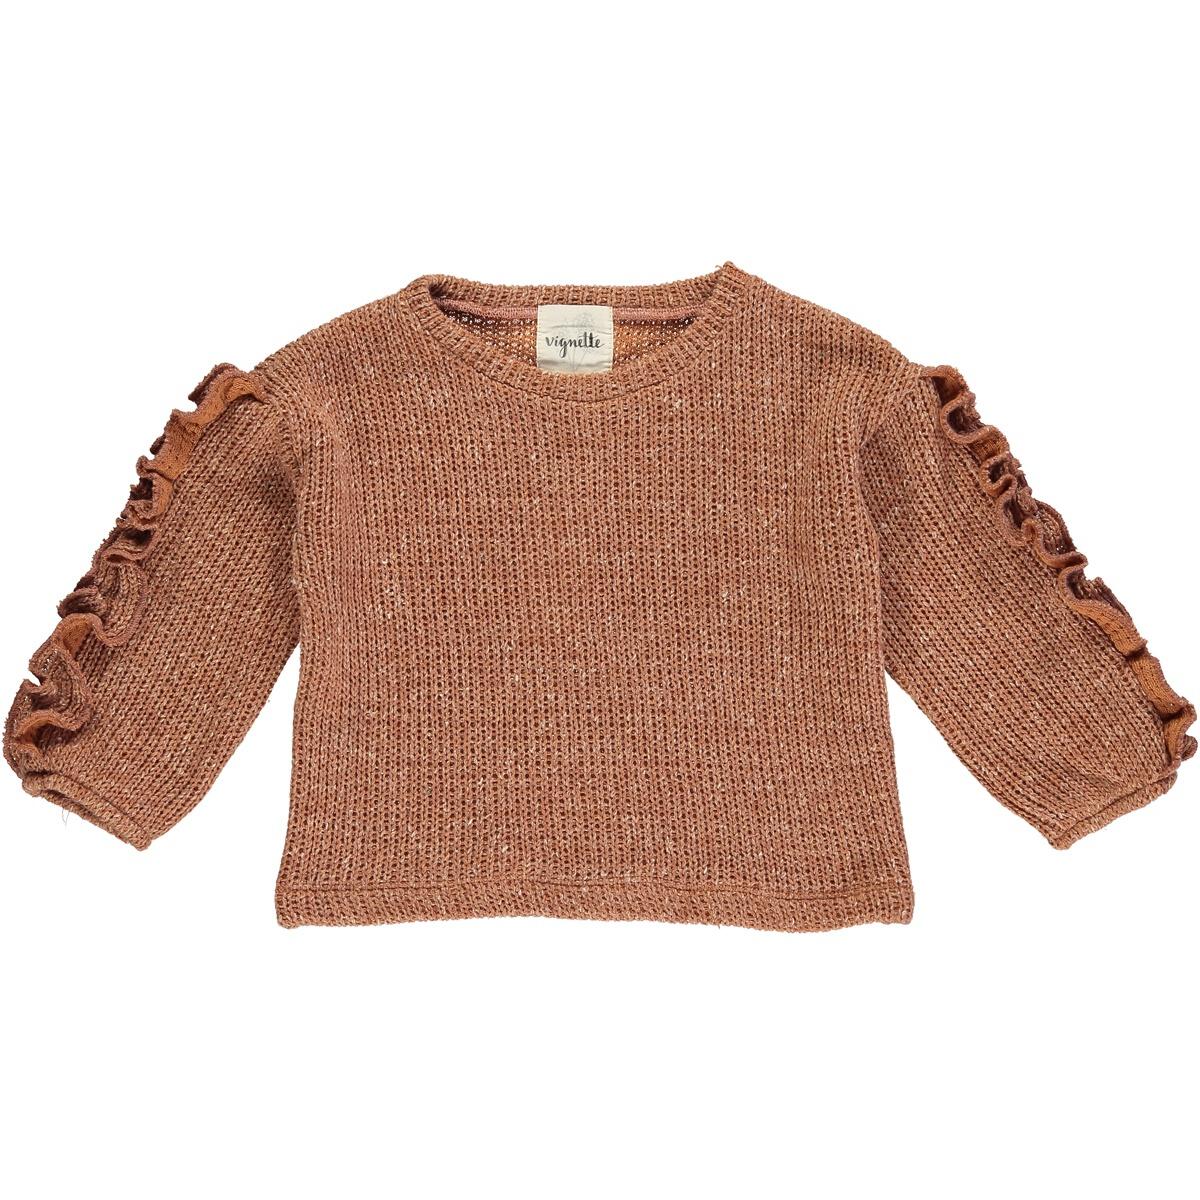 Vignette- Pumpkin Sweater w/ Ruffles